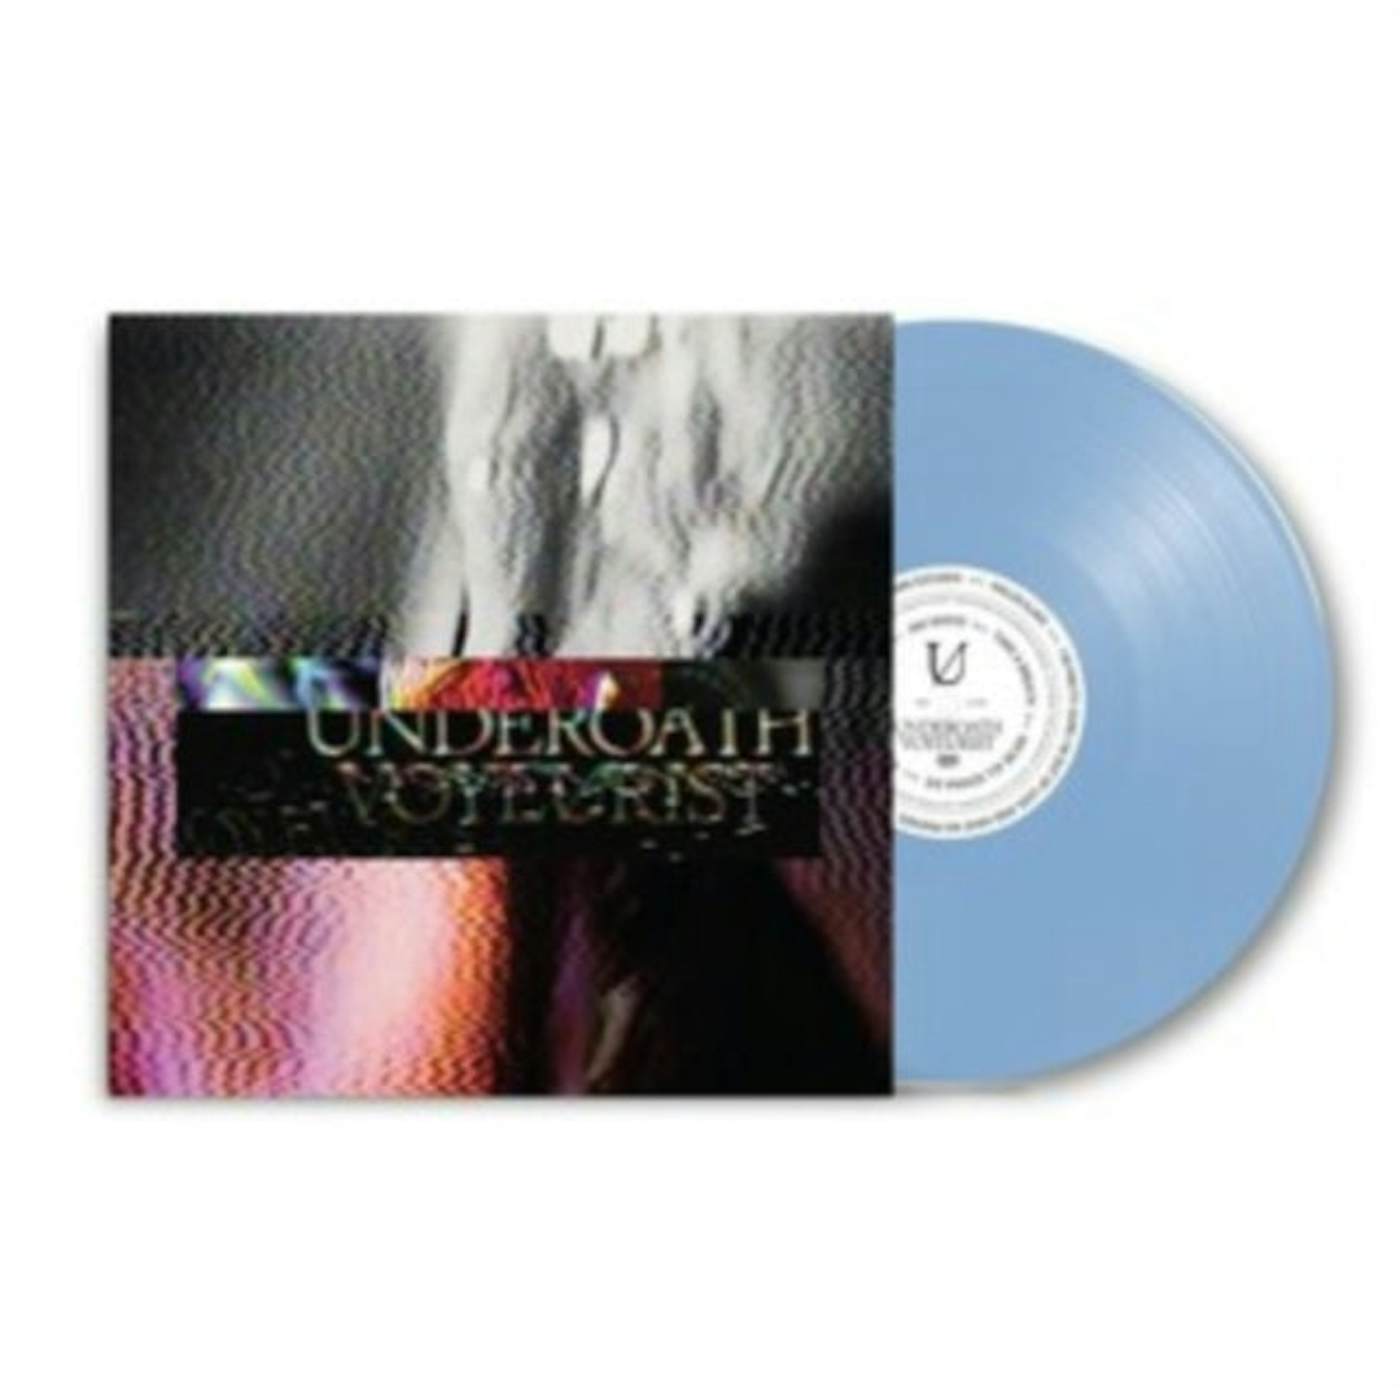 Underoath LP Vinyl Record - Voyeurist (Light Blue Vinyl)